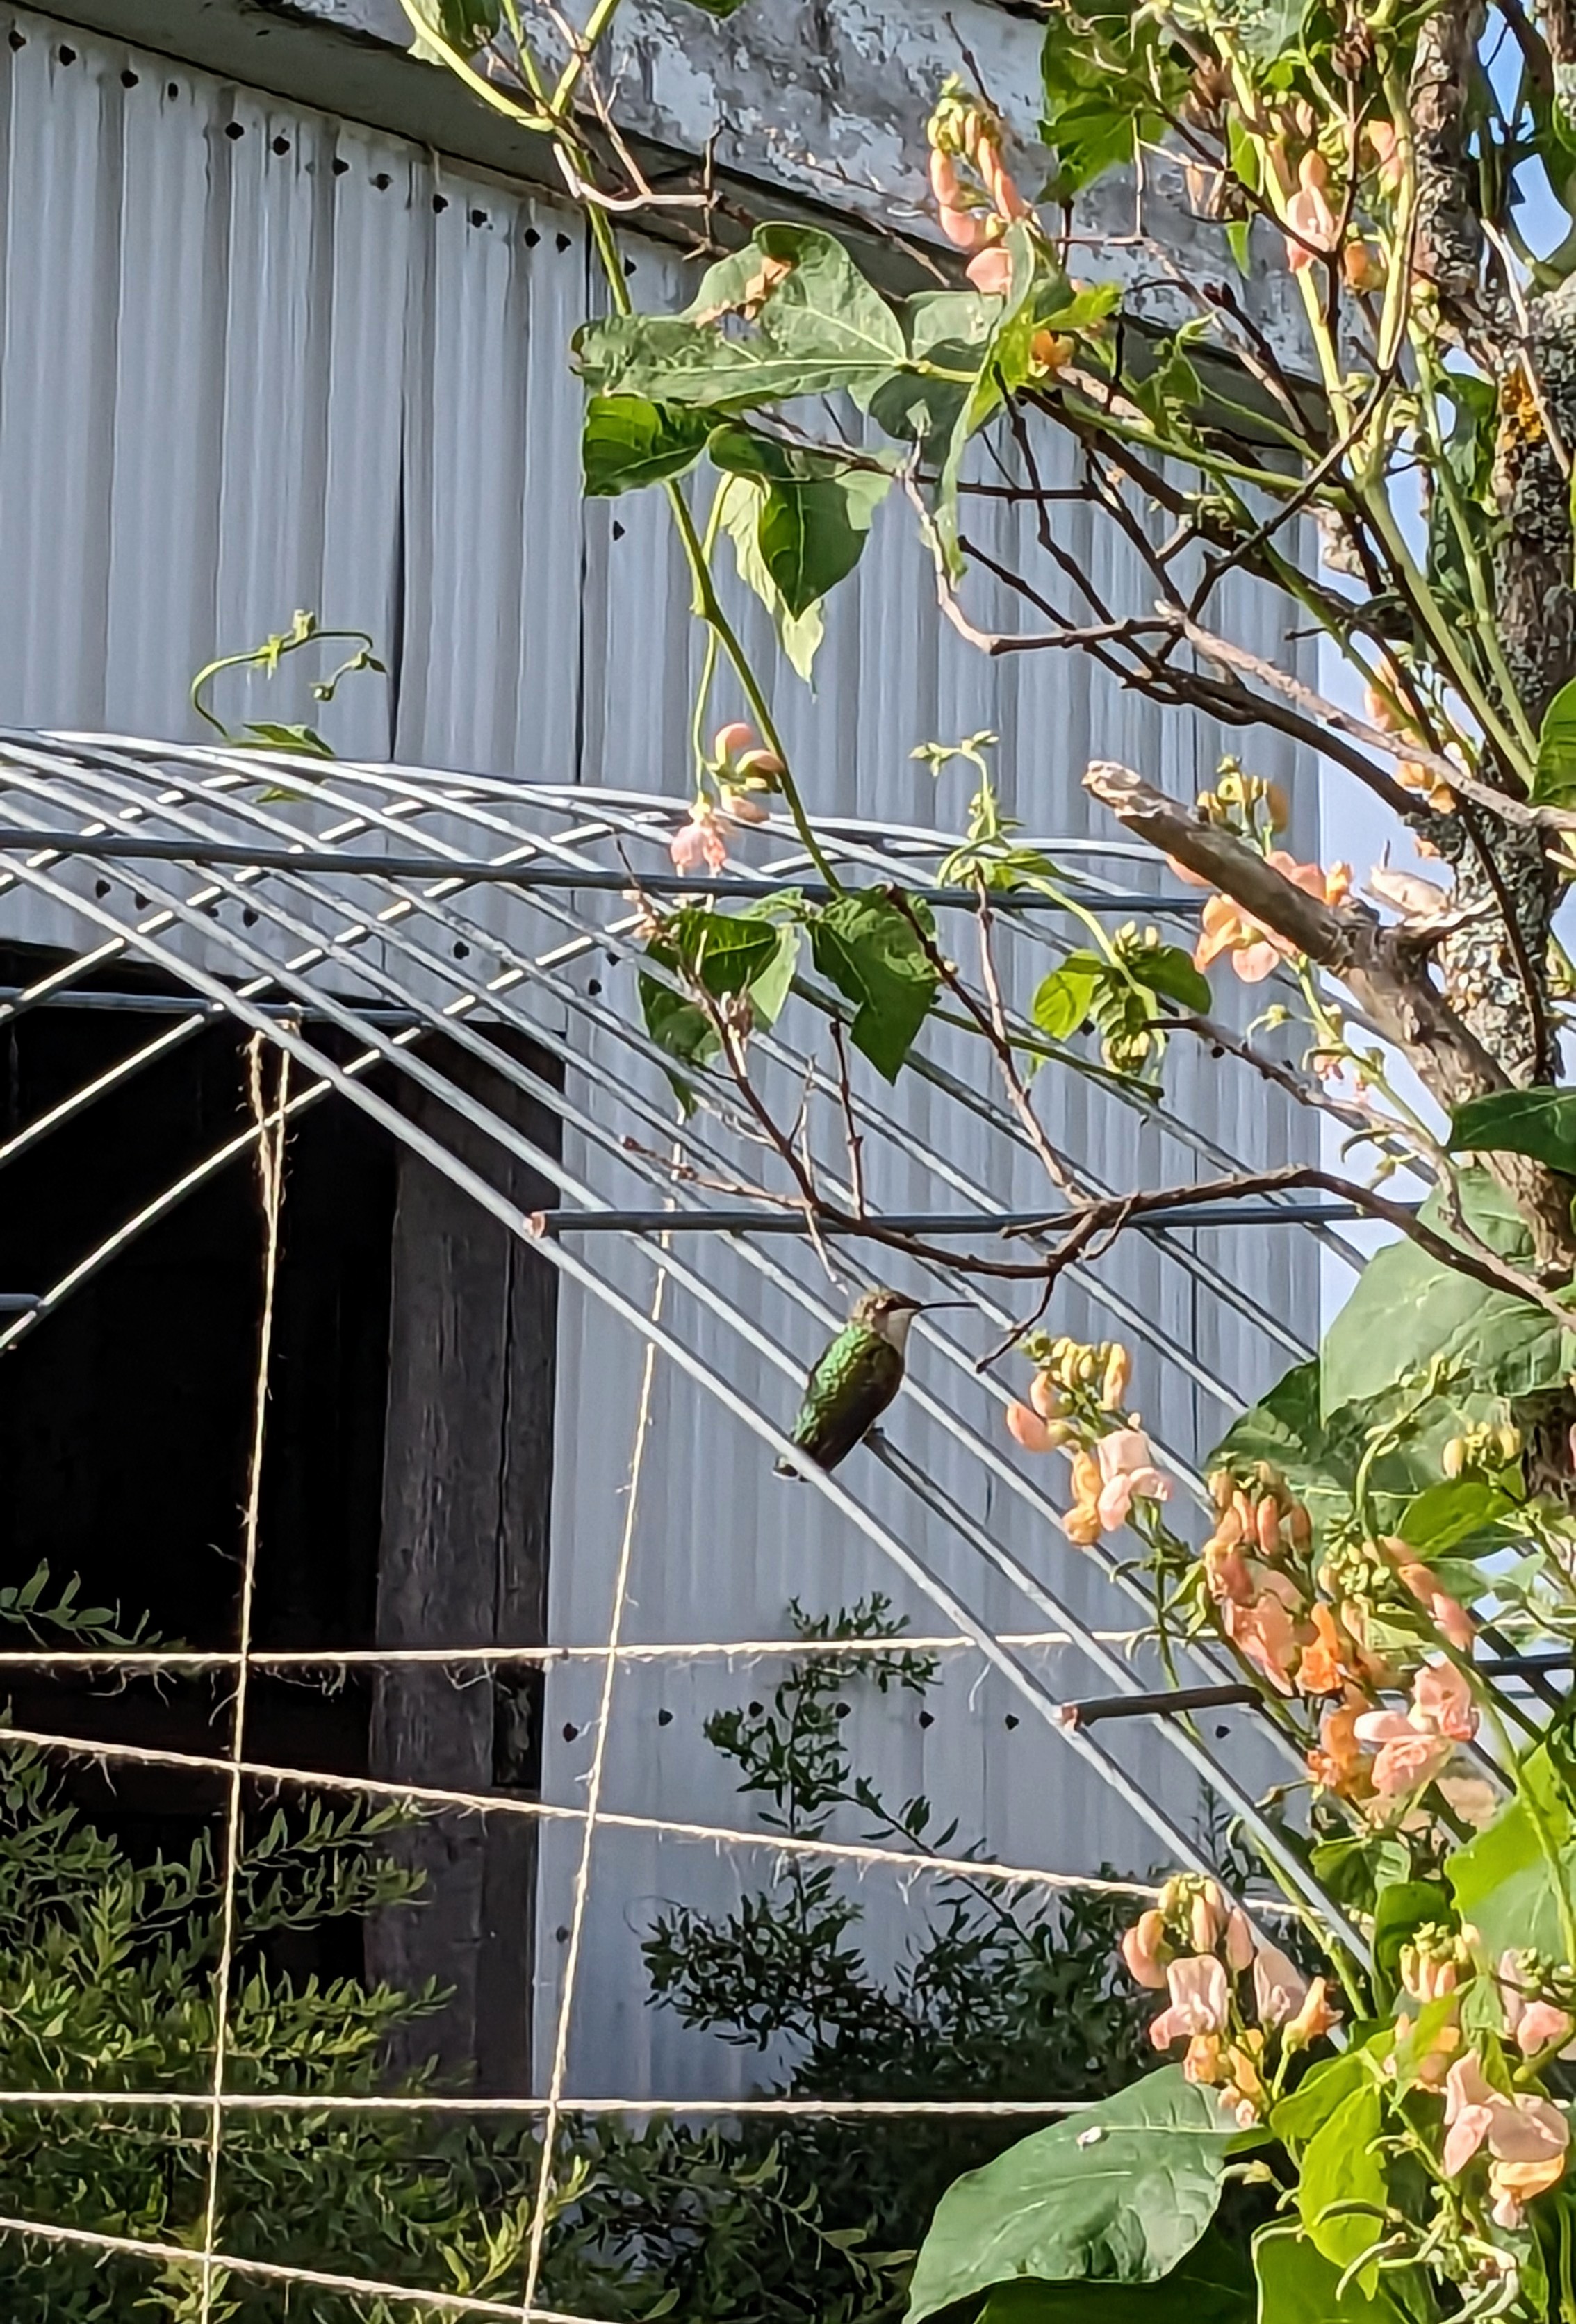 Hummingbird perched on a trellis.